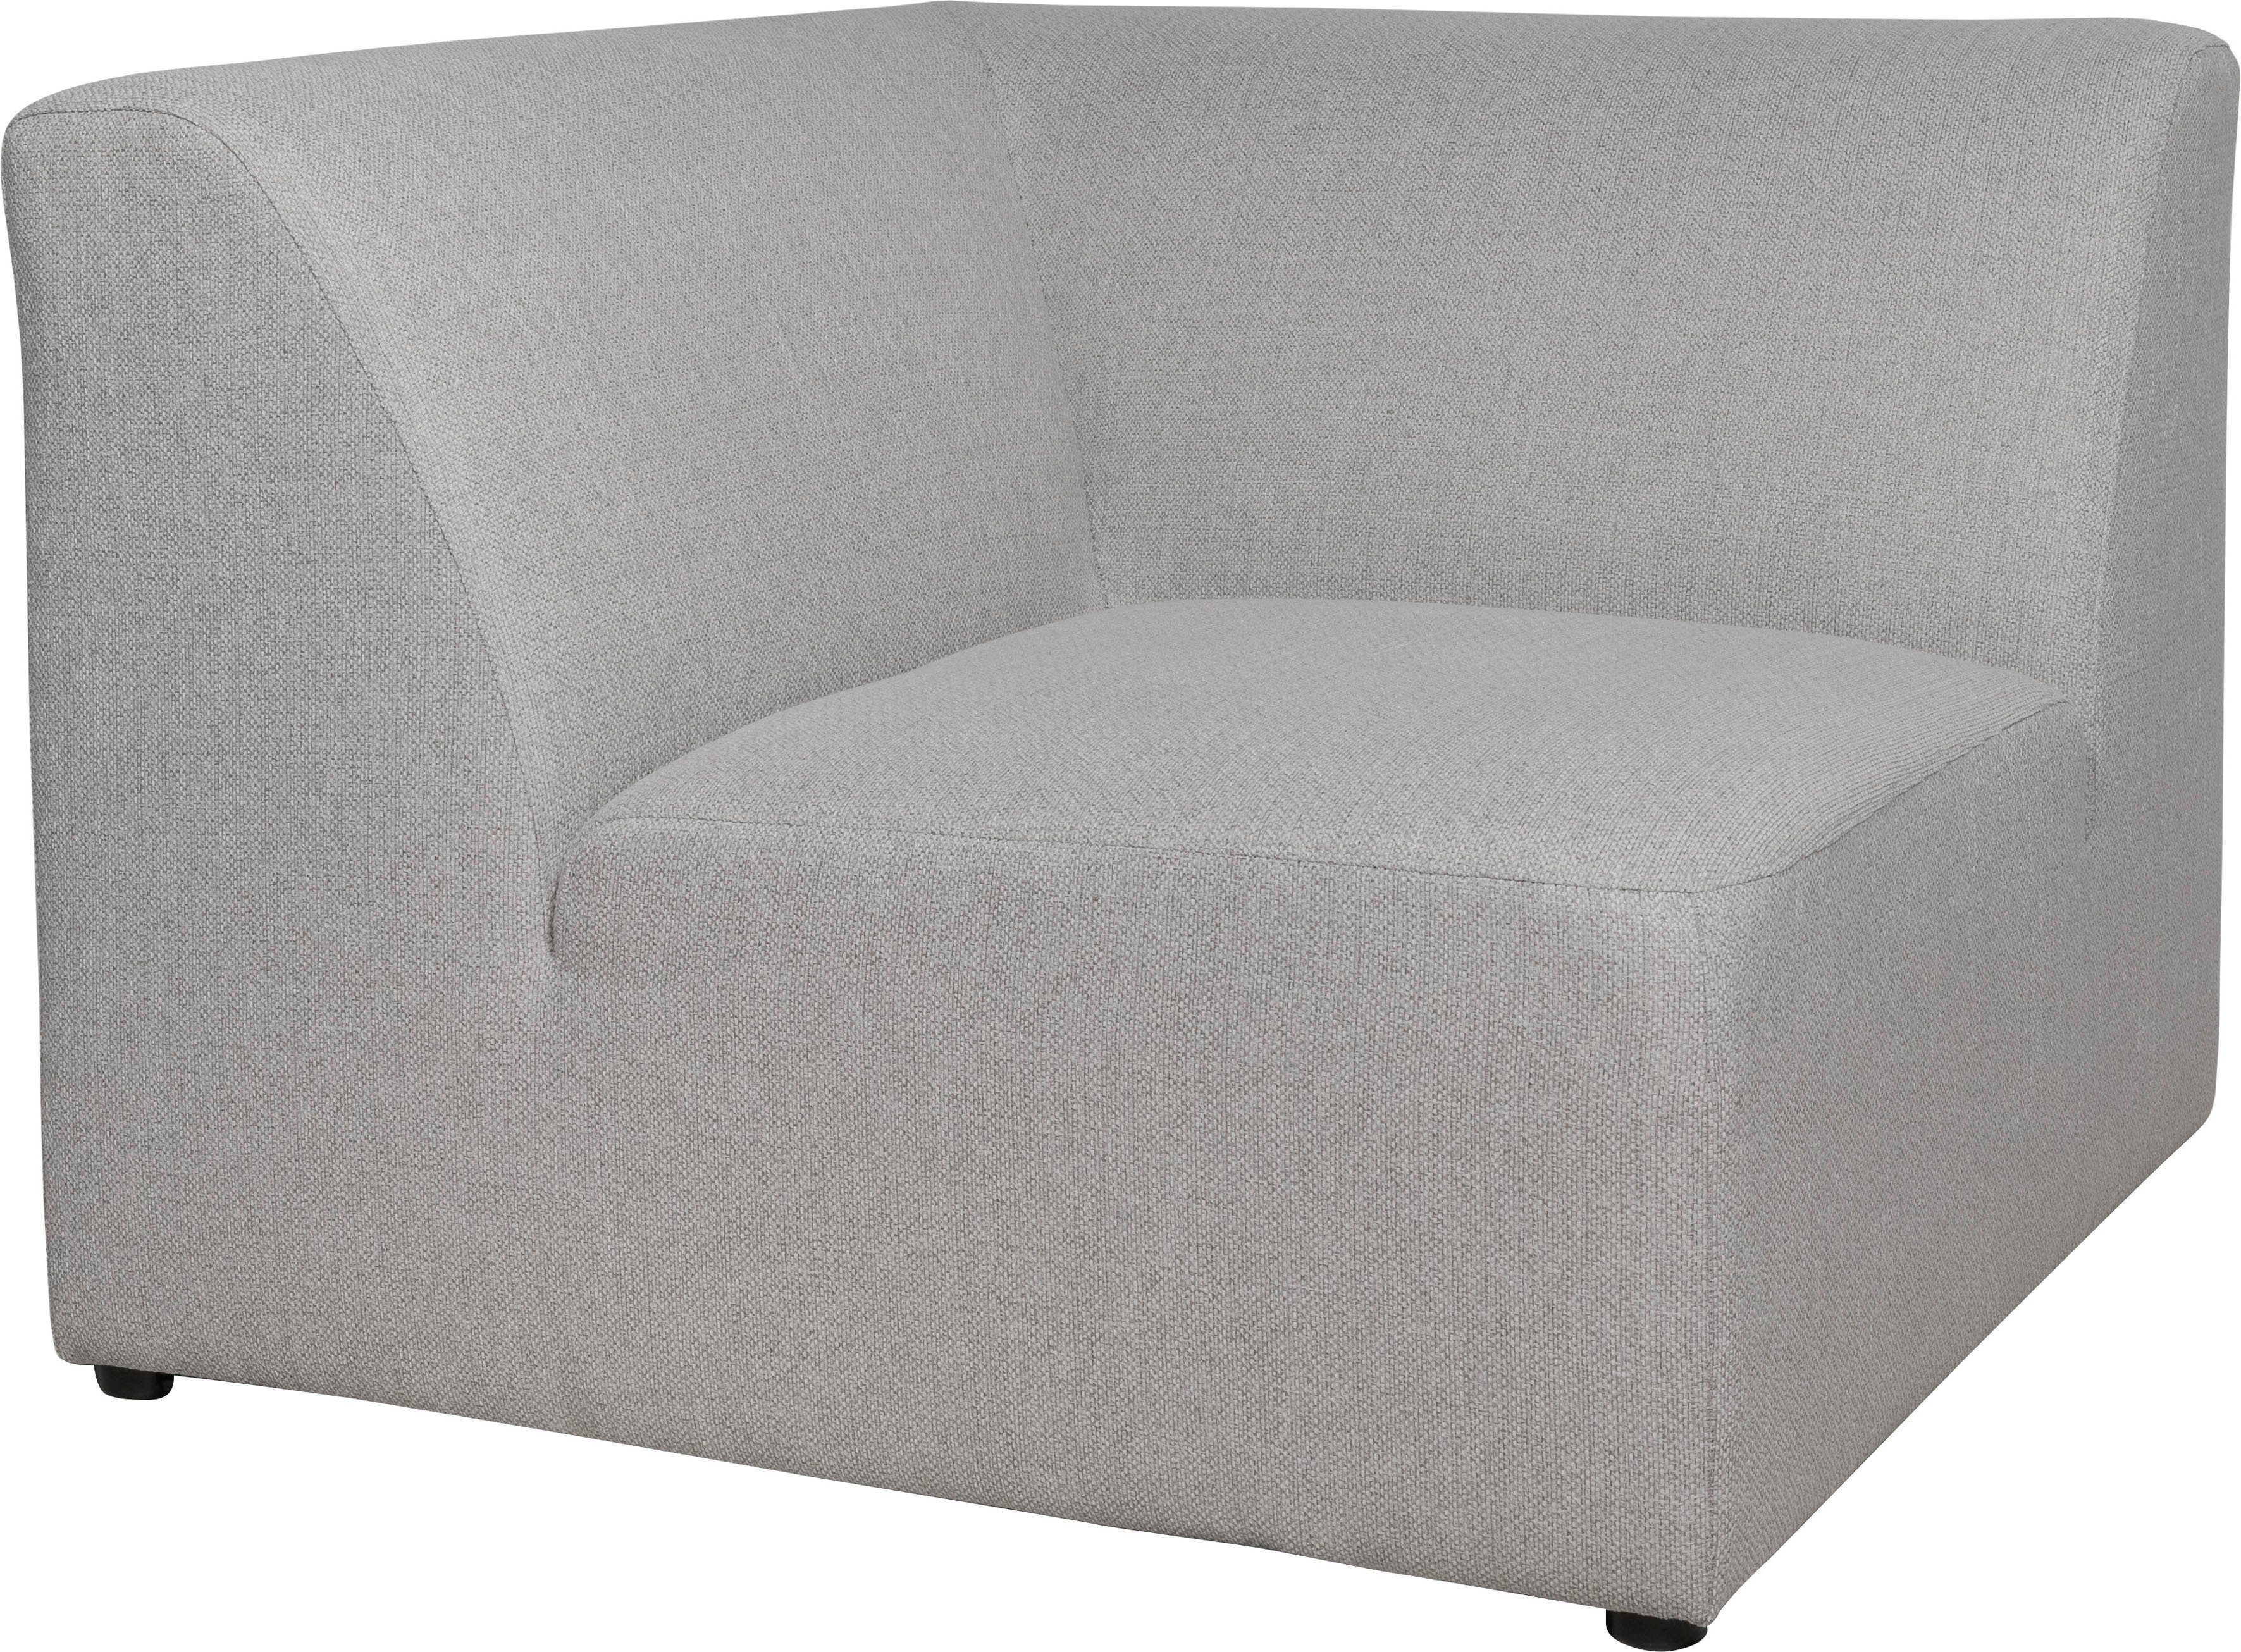 Koa, INOSIGN angenehmer Proportionen Komfort, beige schöne Sofa-Eckelement